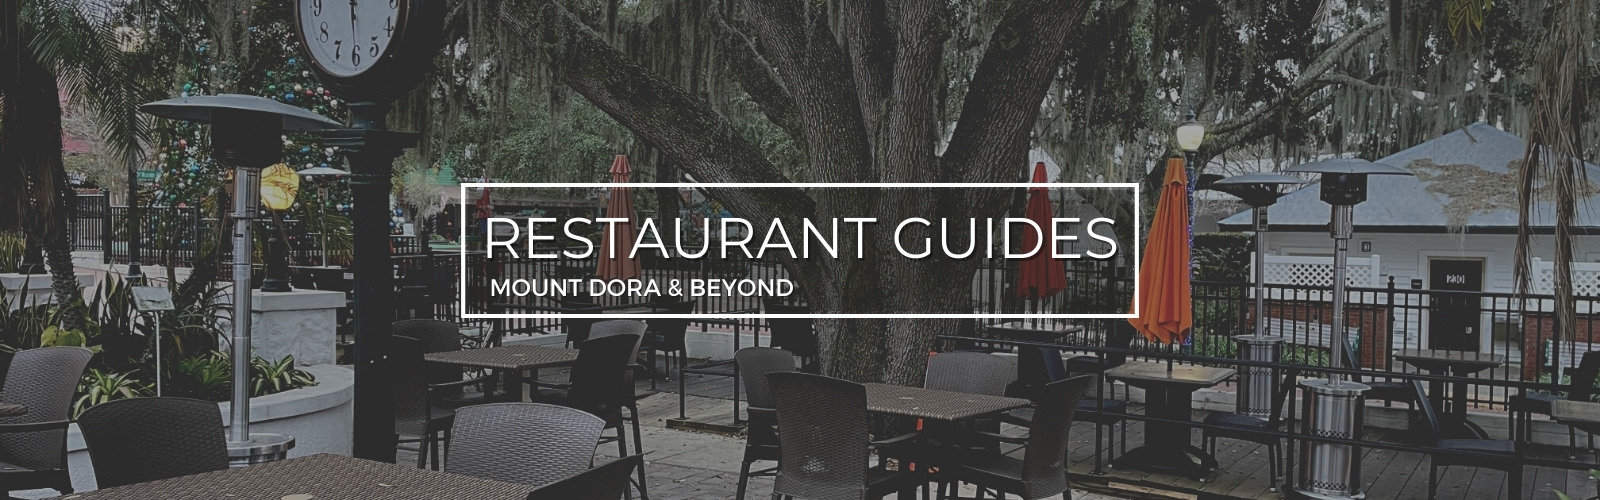 Restaurant guide Mount Dora & Beyond